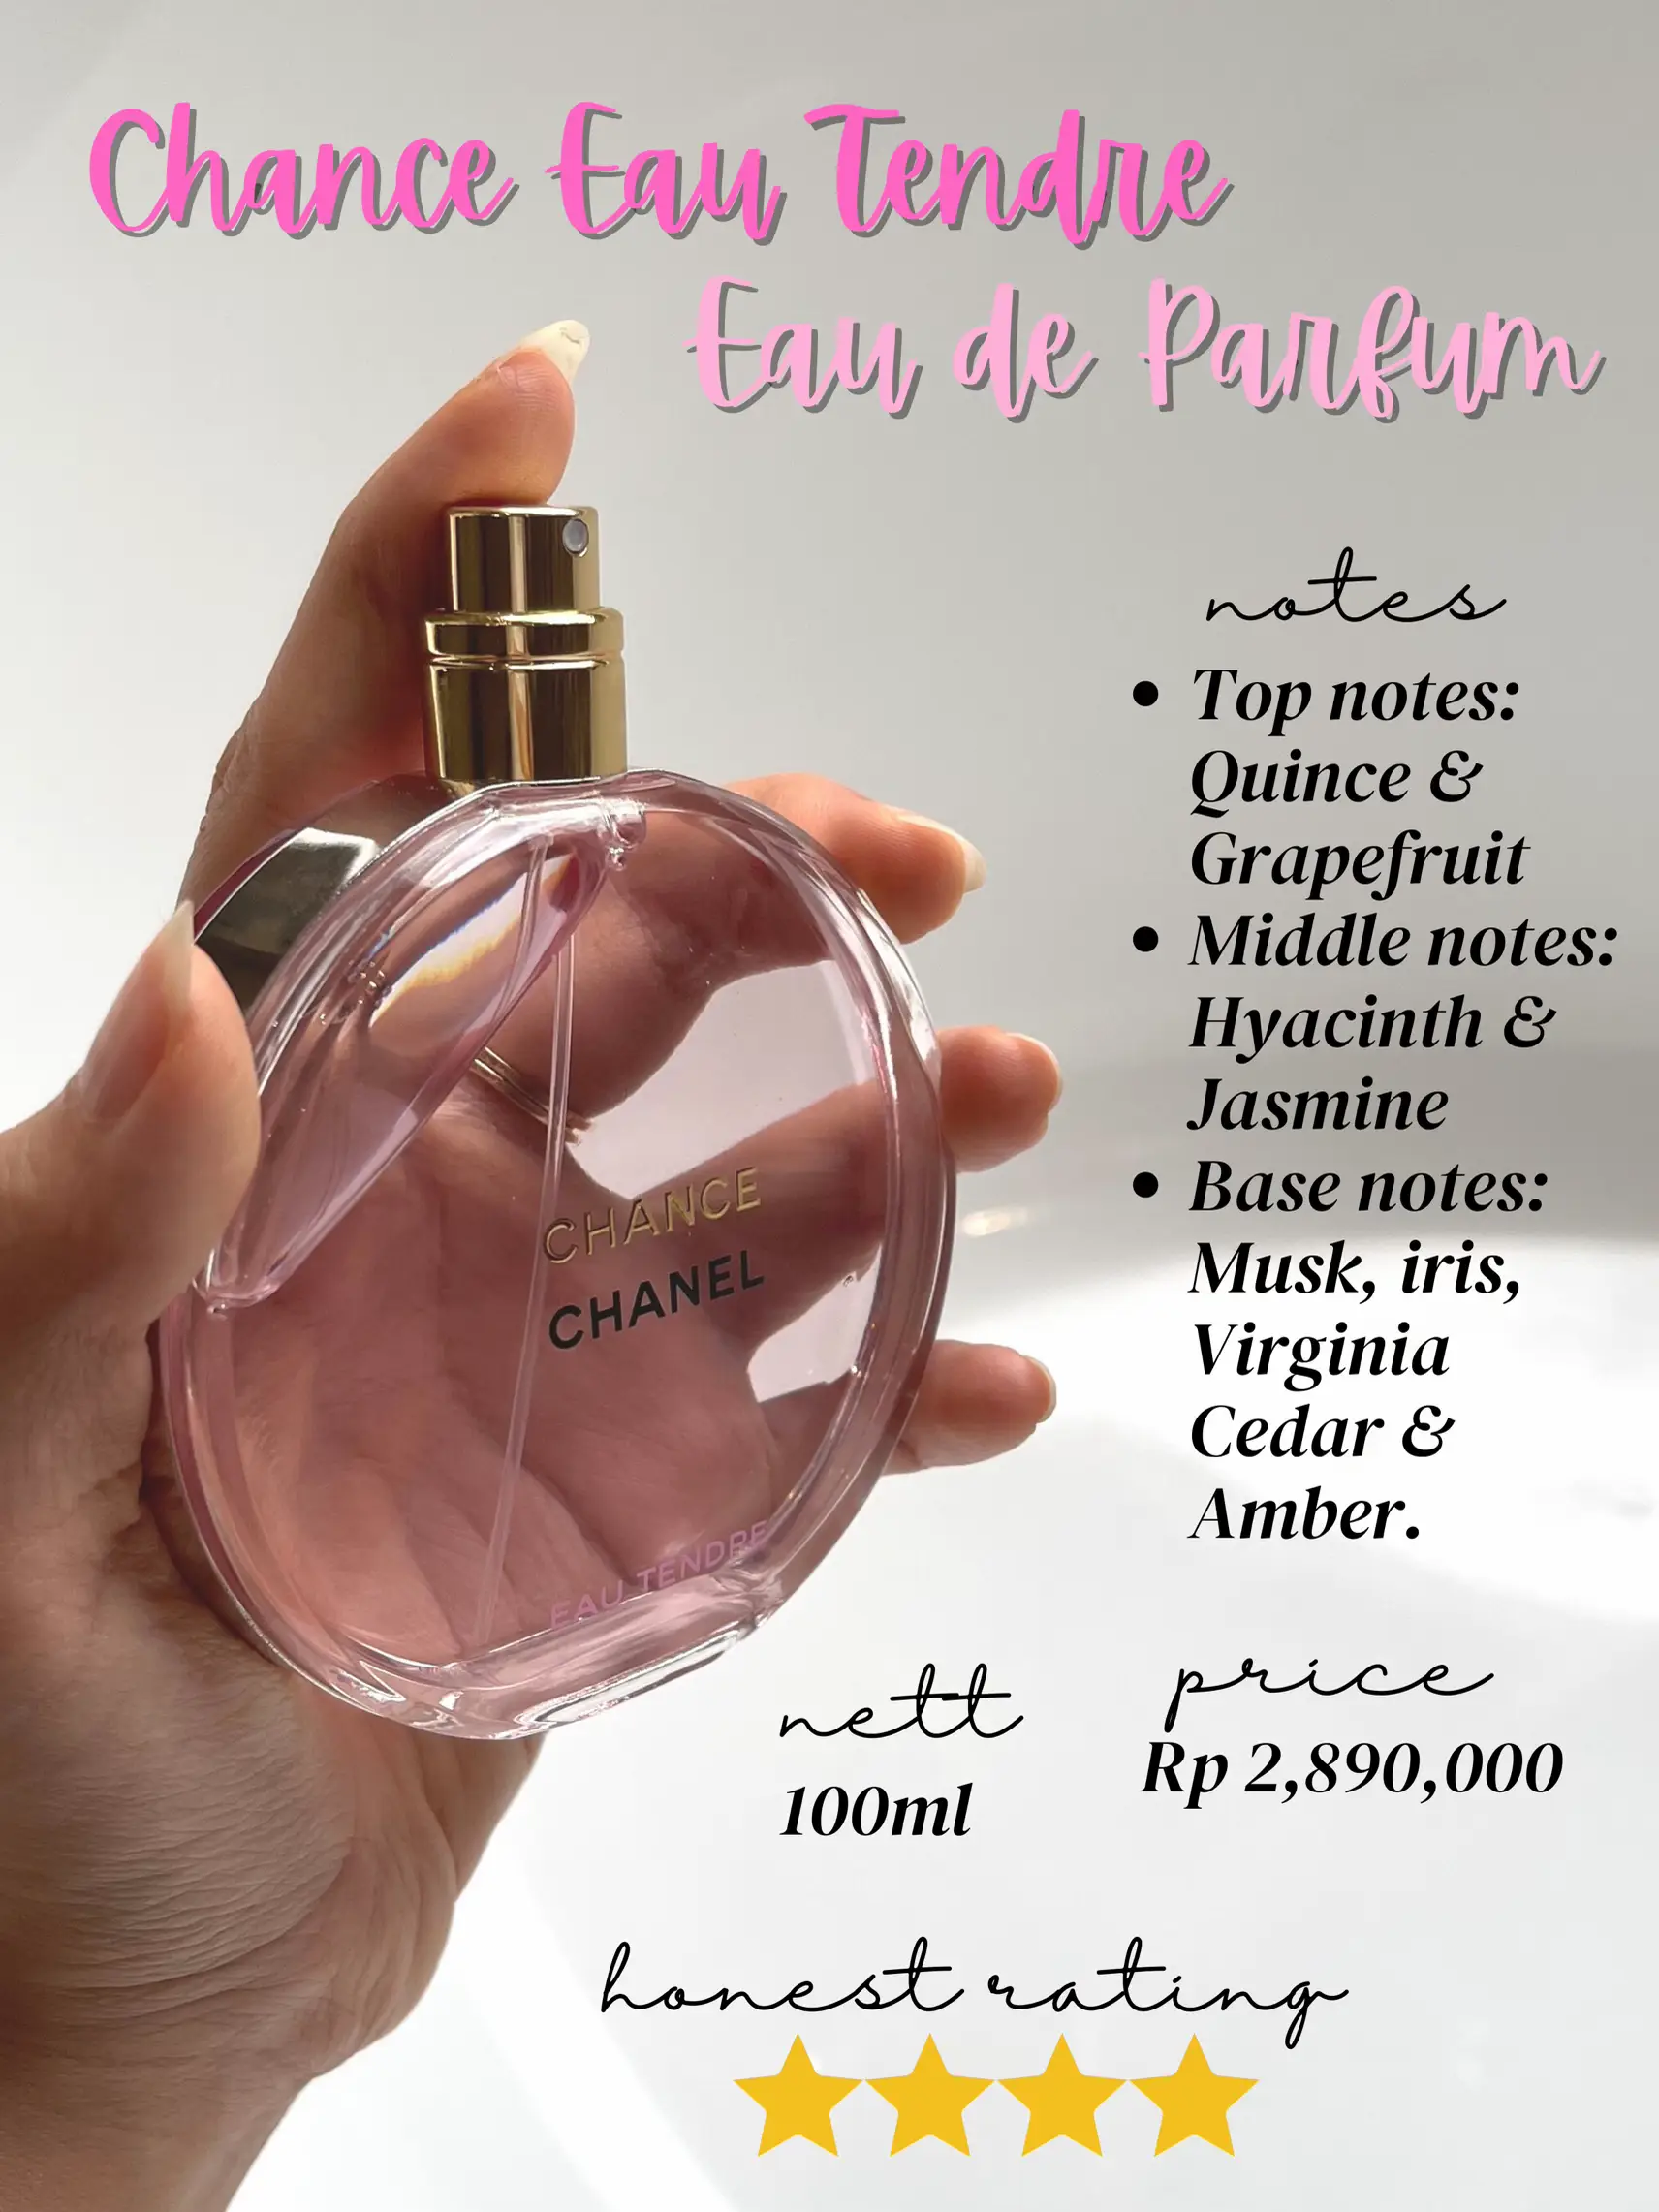 Chanel Chance Eau Tendre Fragrance-Sweet Feminine Fragrance